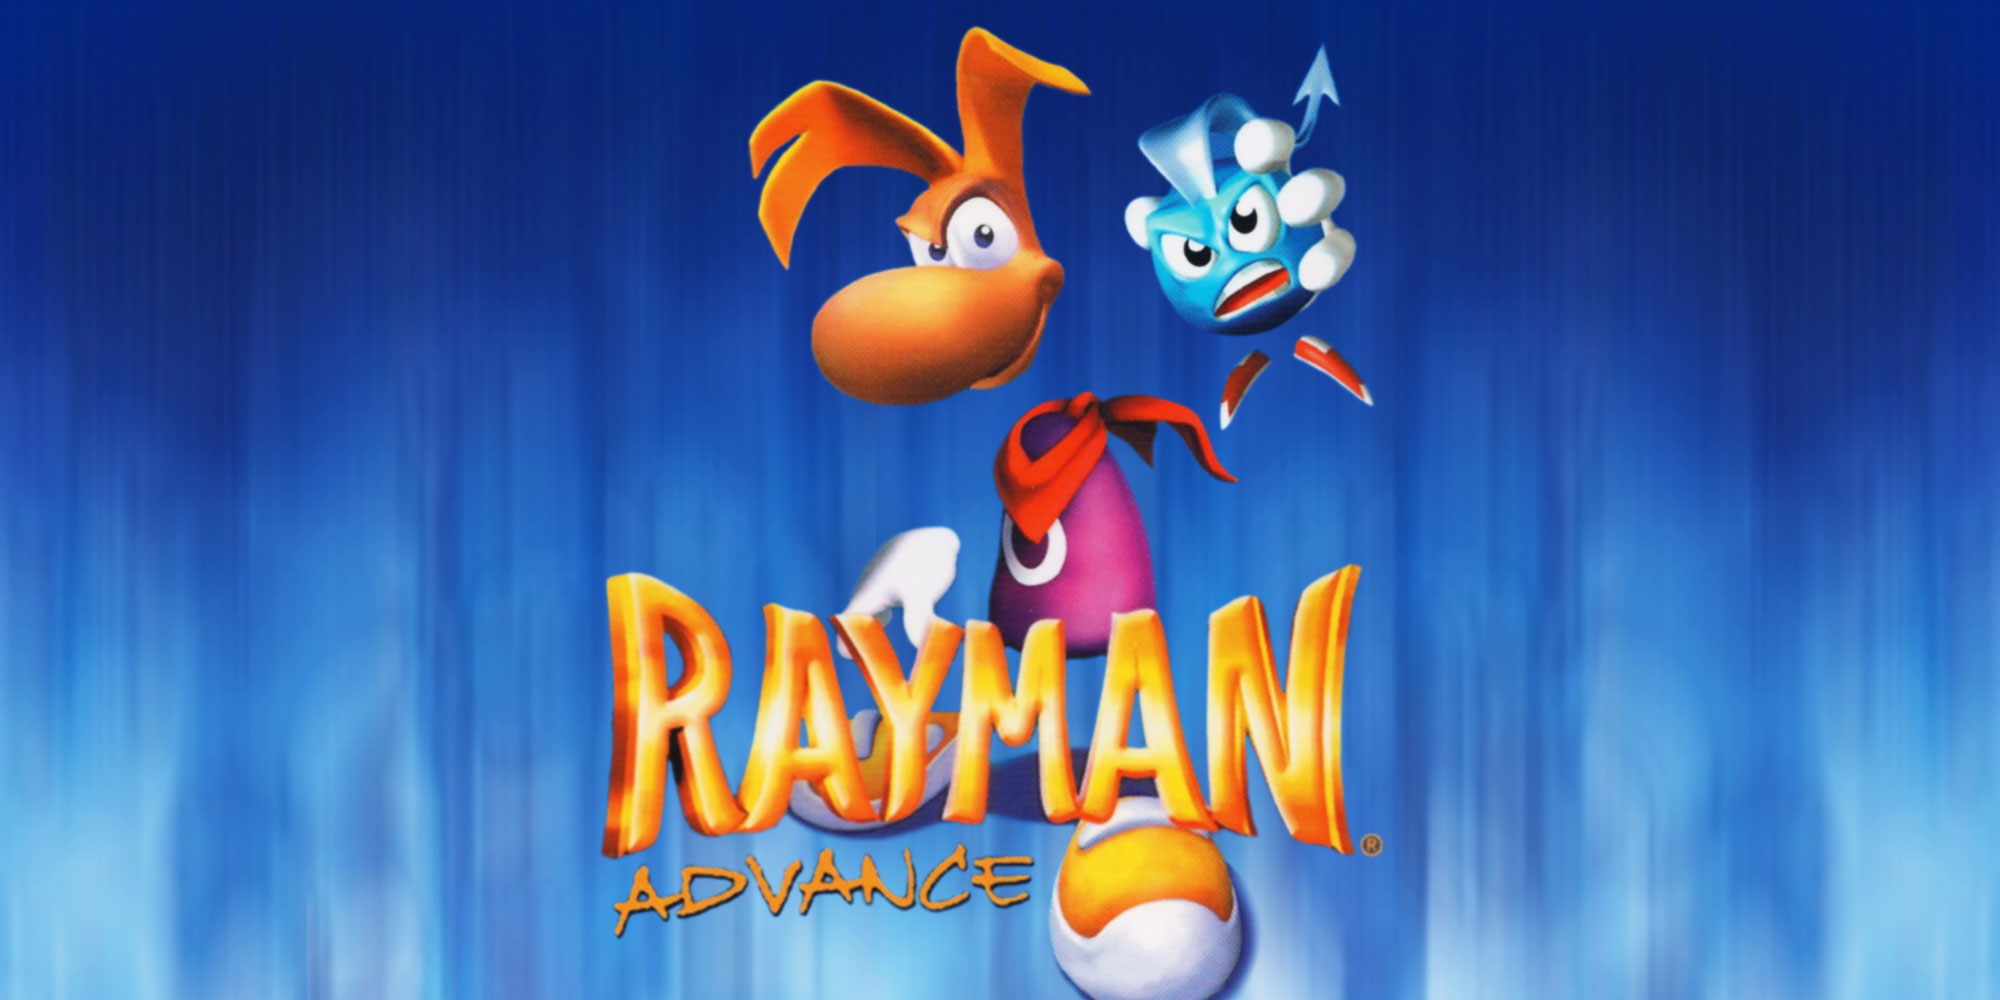 vela Azotado por el viento seco Rayman Advance, Rayman 3 hitting the European Wii U Virtual Console tomorrow